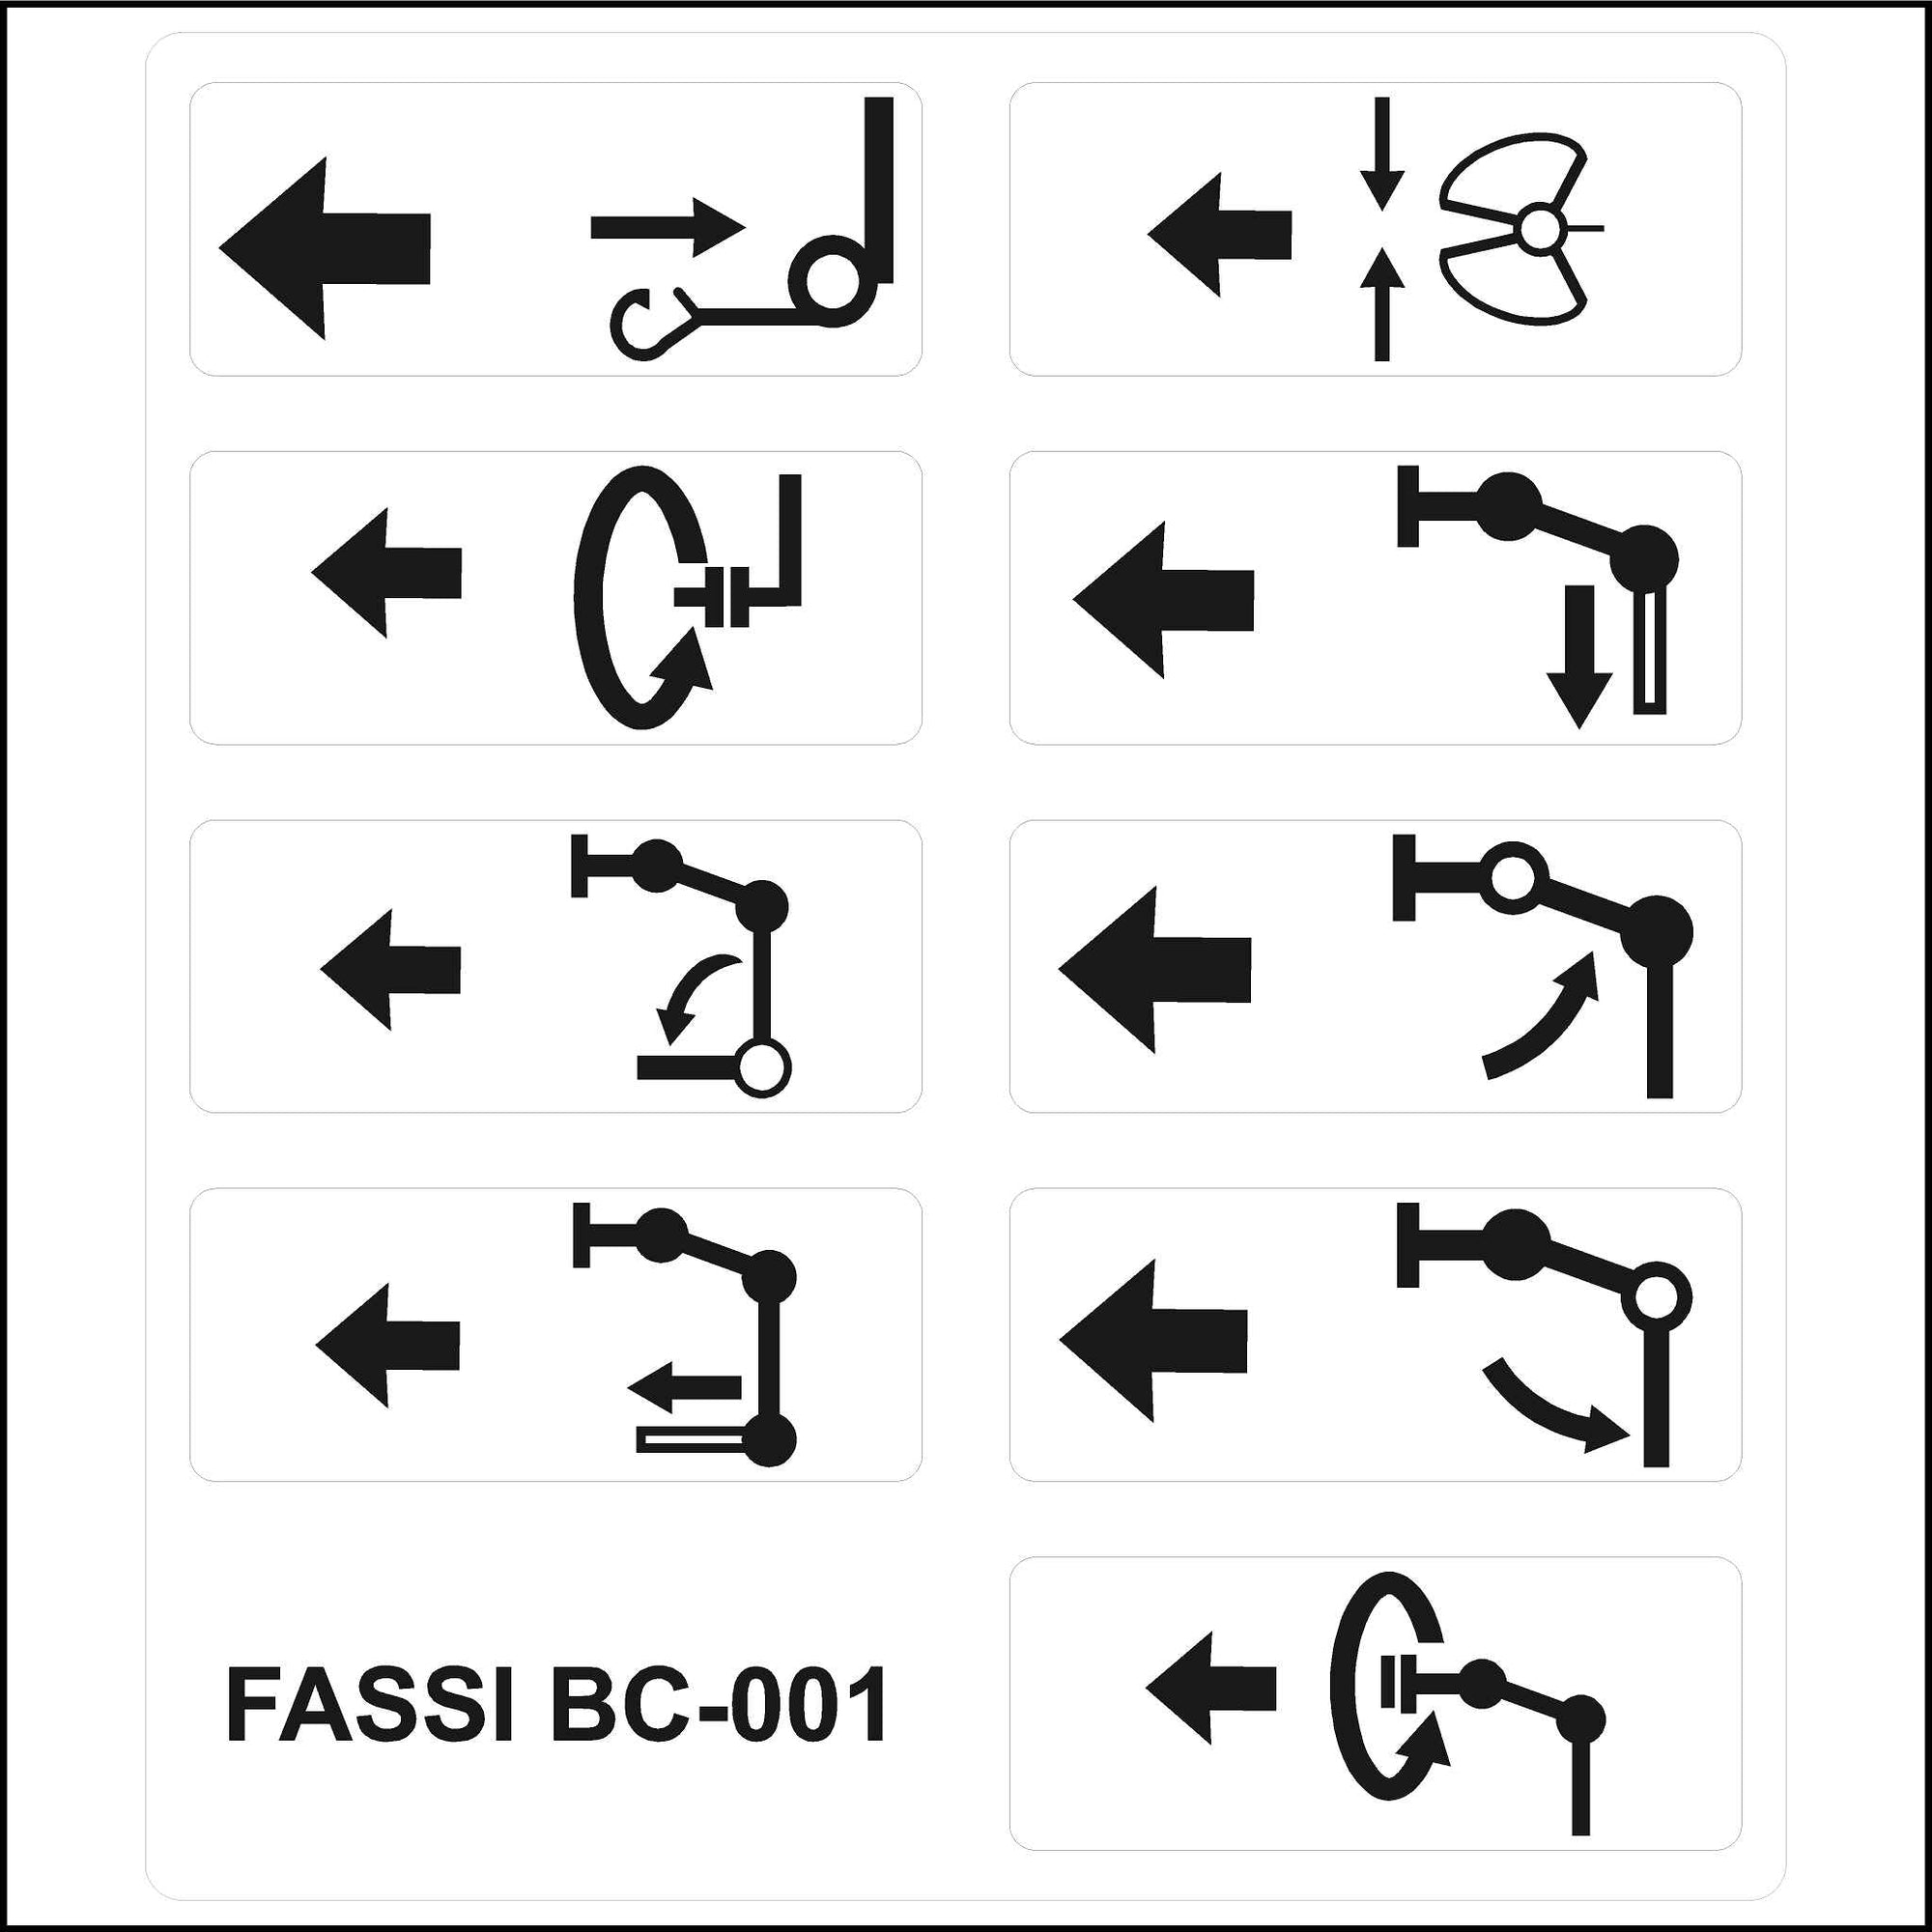 FASSI Crane Control Label Stickers.